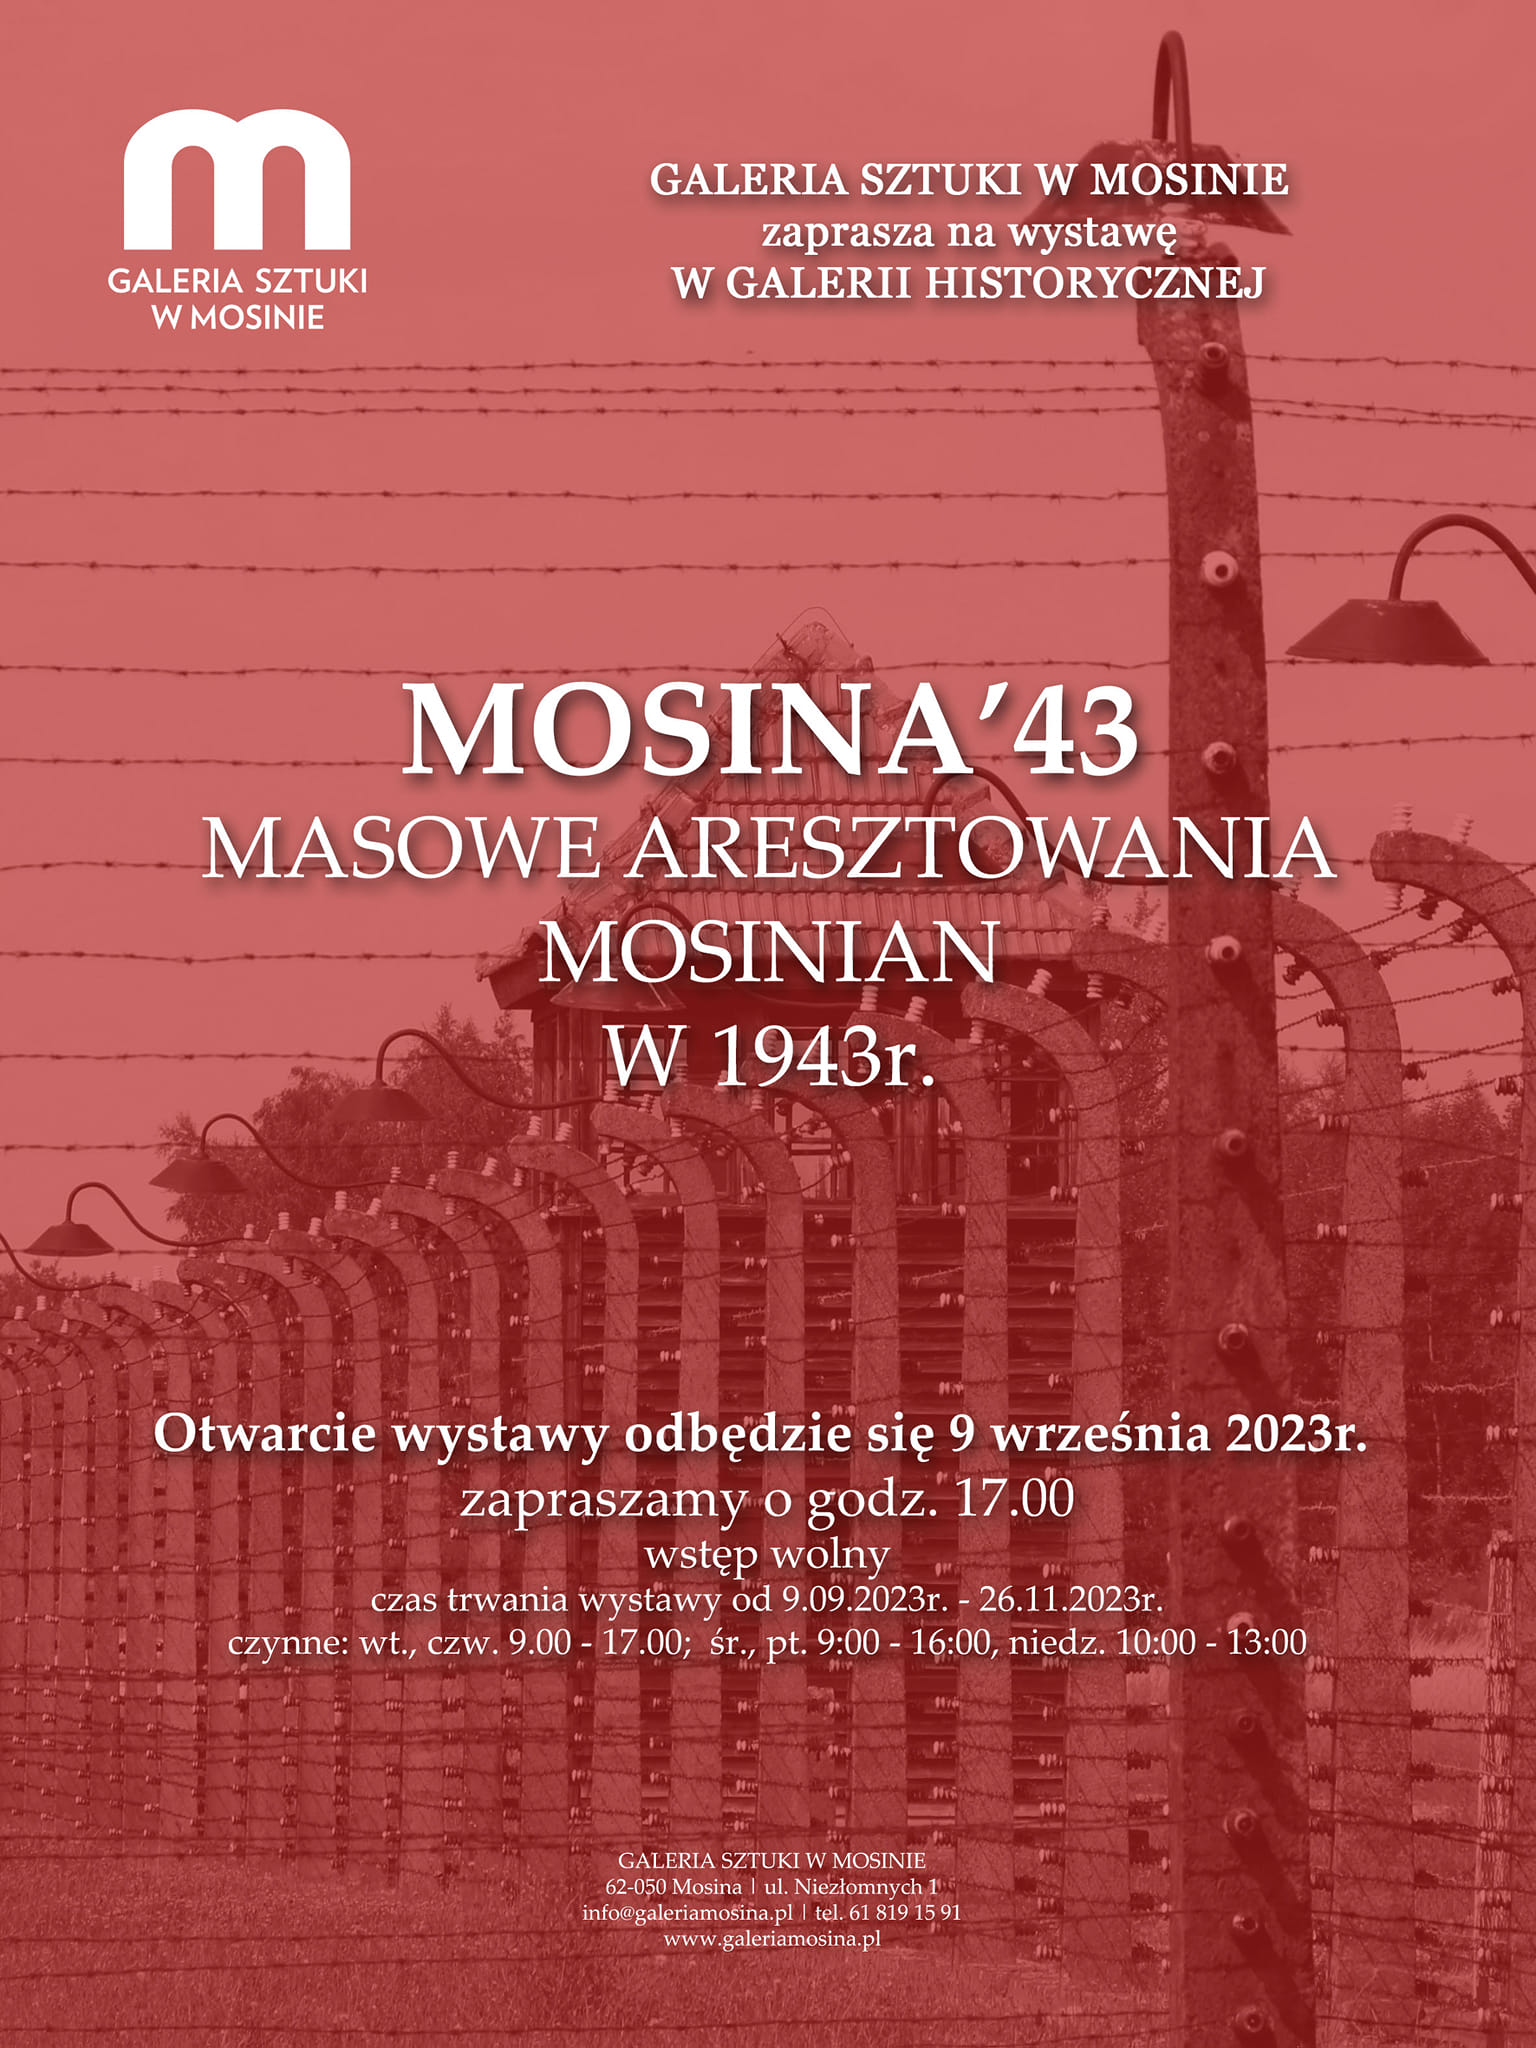 Mosina `43. Masowe aresztowania Mosinian w 1943 r. - Galeria Sztuki w Mosinie